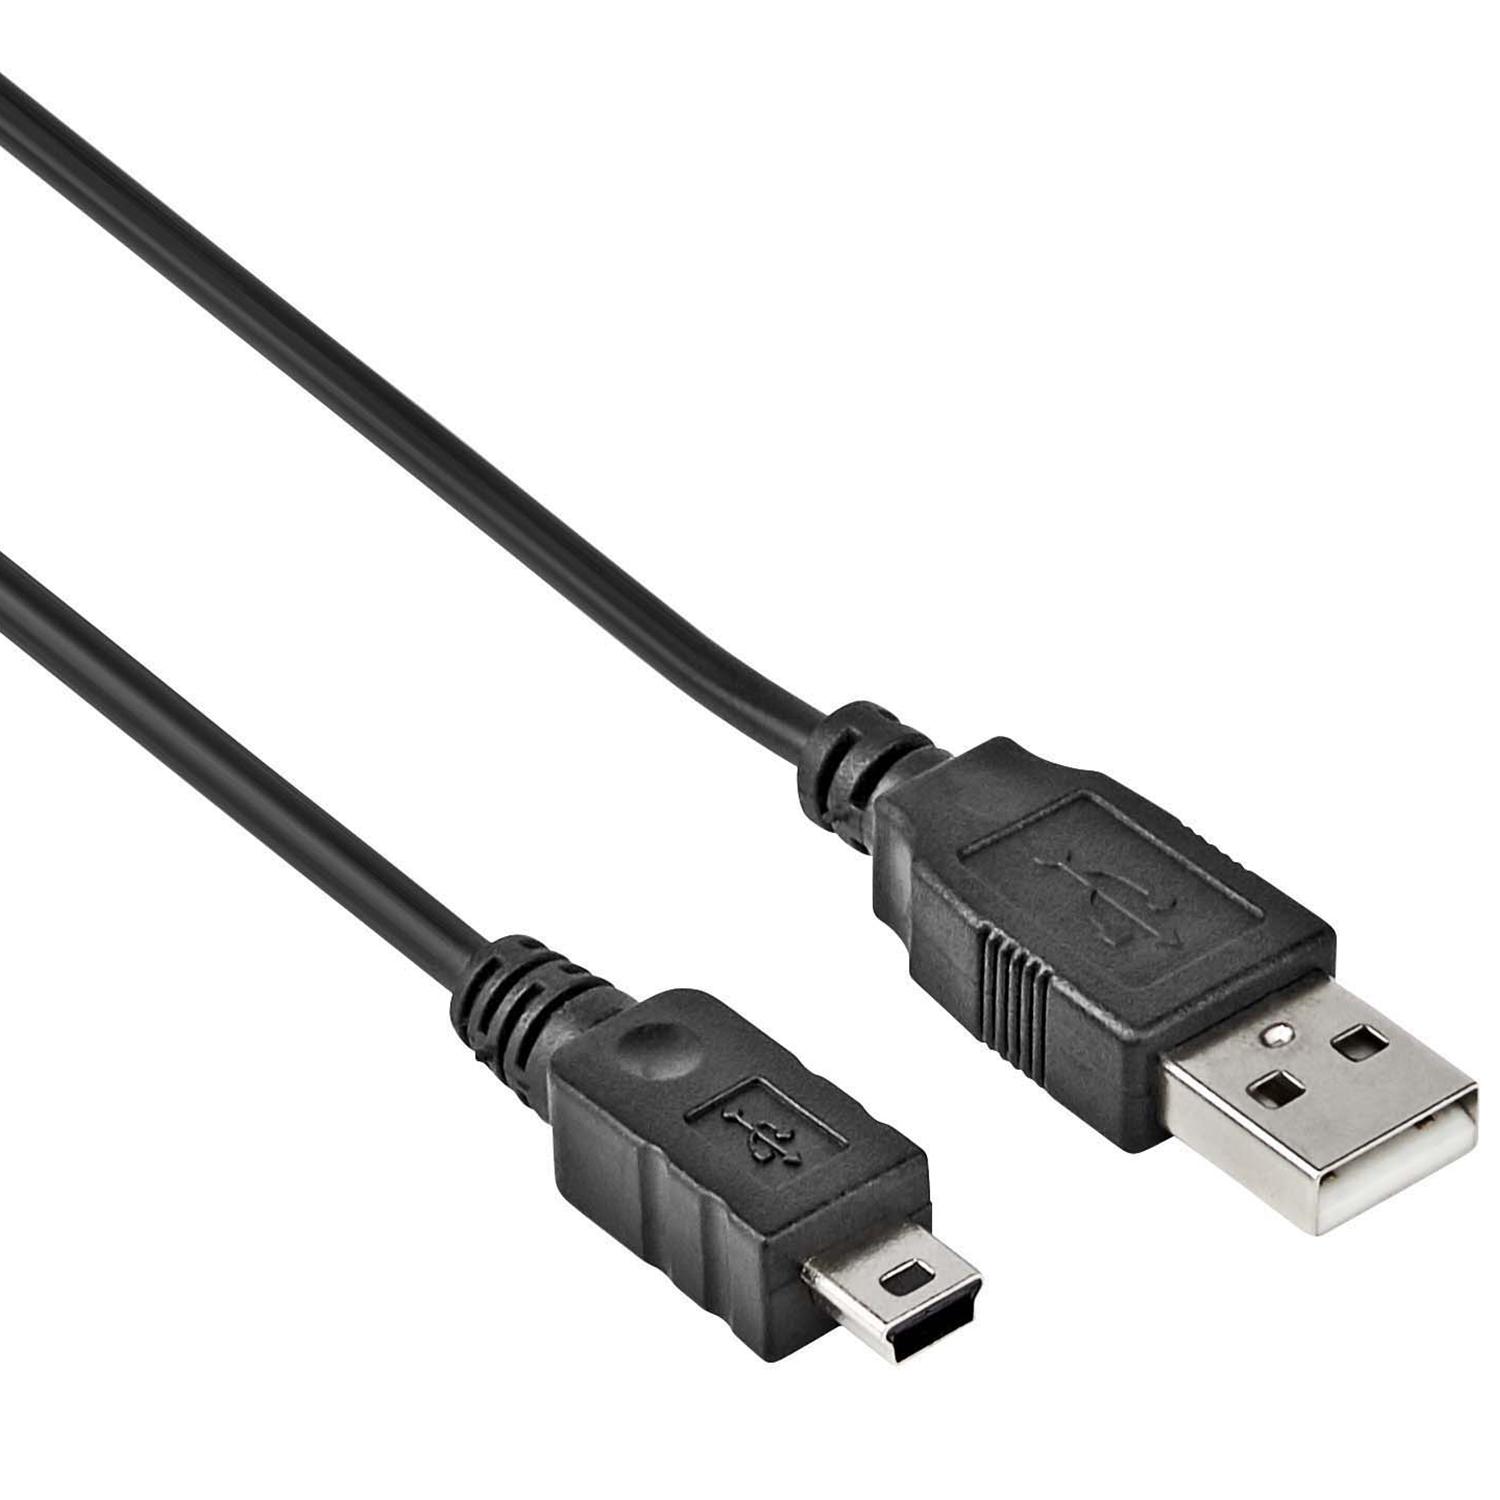 bestrating een miljoen Vijandig Mini USB Kabel - Versie: 2.0 - HighSpeed, Aansluiting 1: USB A male,  Aansluiting 2: Mini USB male, Lengte: 1 meter.